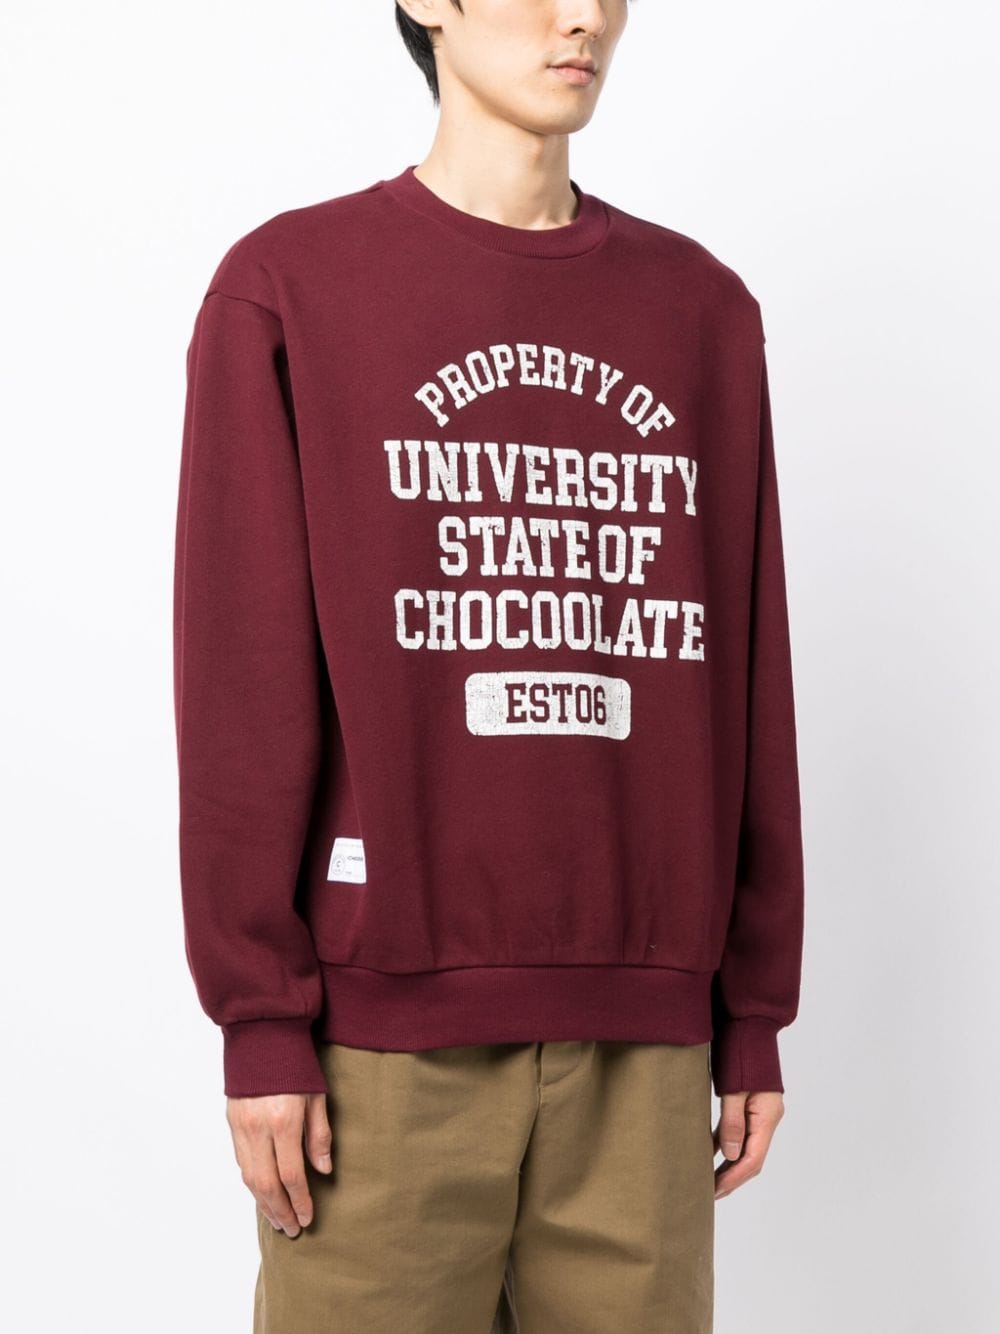 CHOCOOLATE Sweater met logoprint Rood